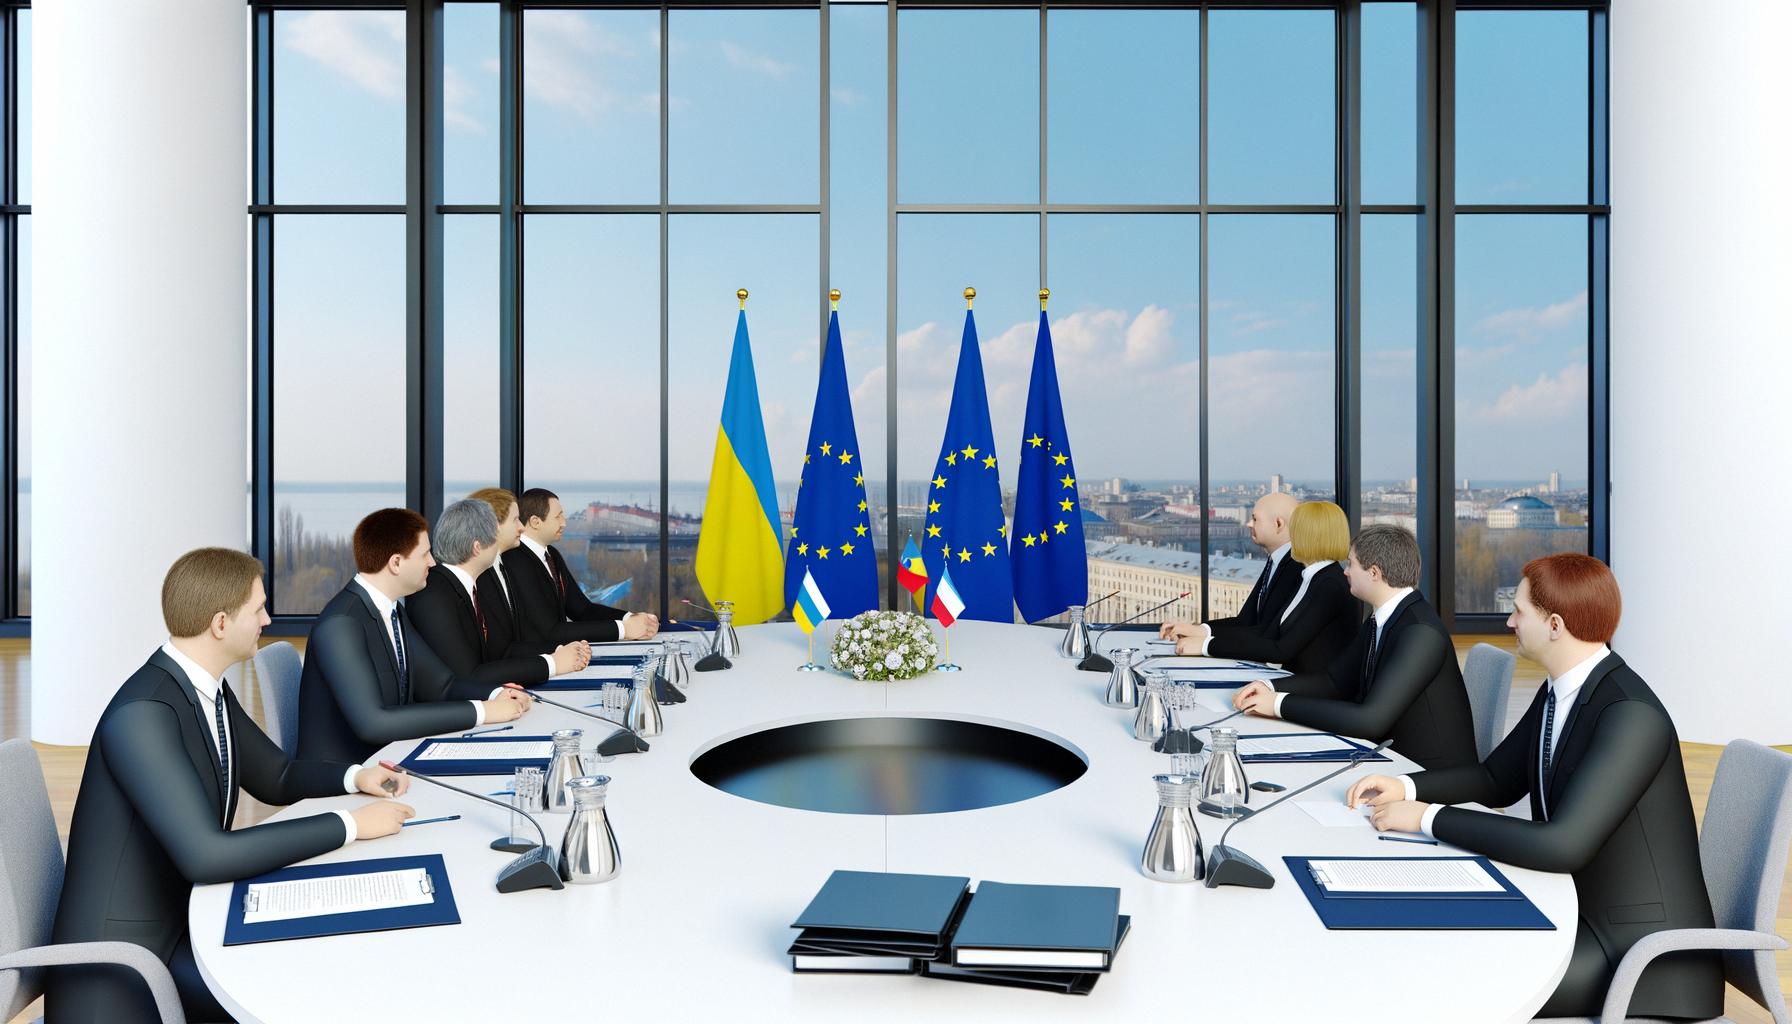 Ukraine and Moldova have begun EU membership negotiations, aiming for closer Western integration.